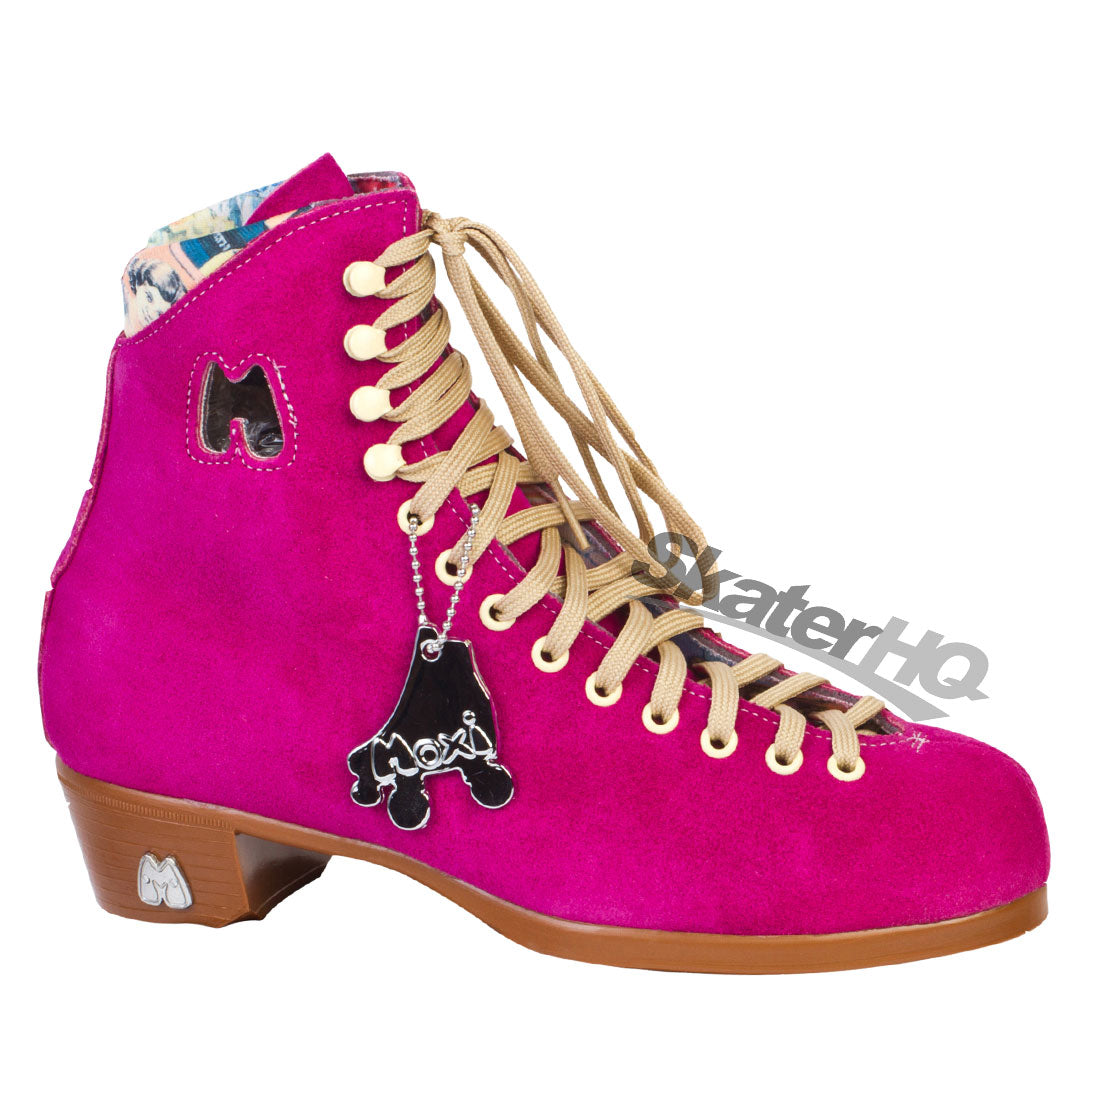 Moxi Lolly Boot - Fuchsia Roller Skate Boots